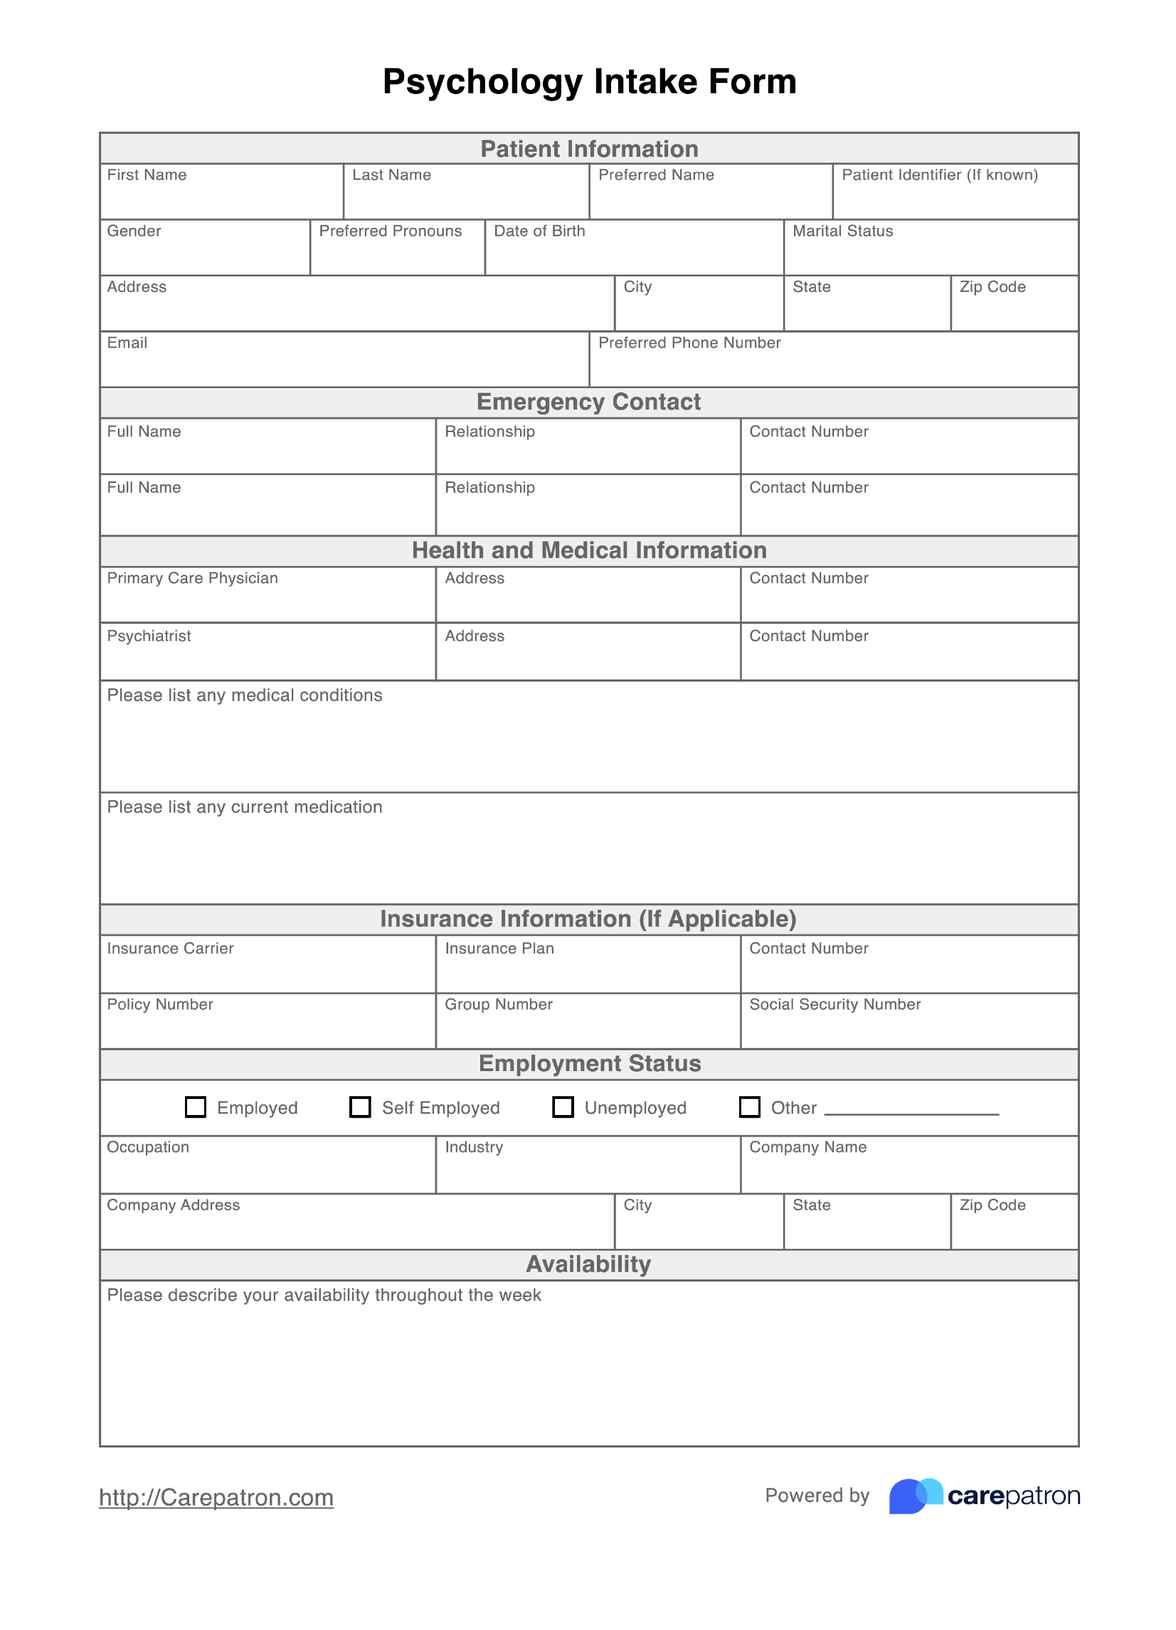 Psychology Intake Form PDF Example